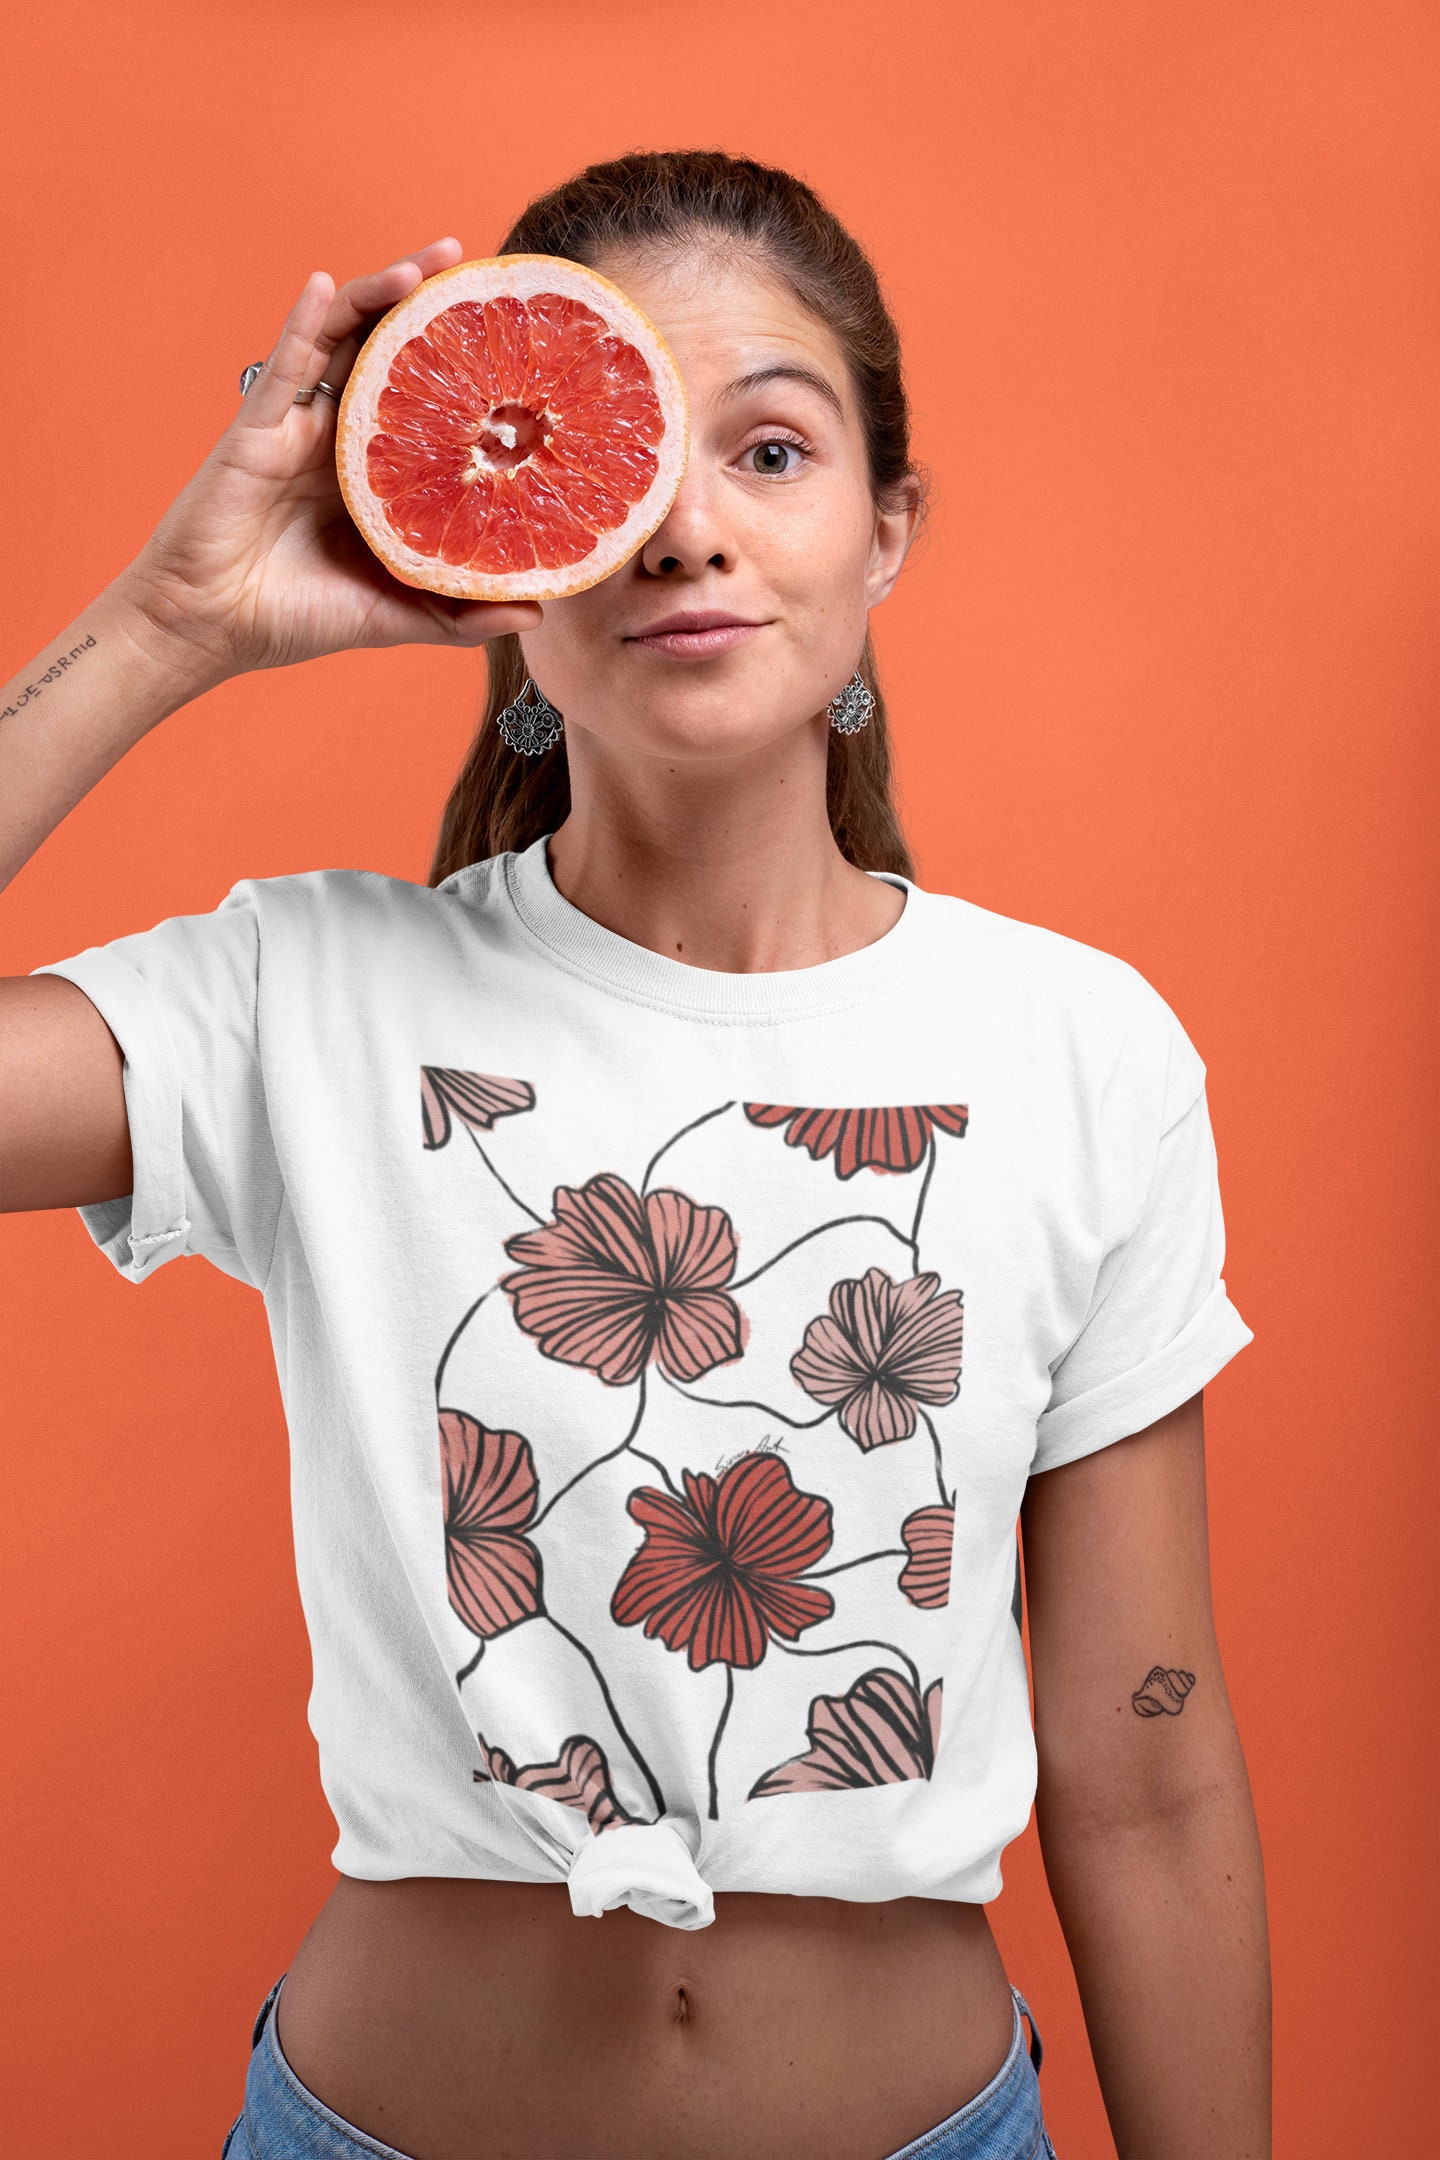 Abstract T-shirt Floral Shirt Art T-shirt Aesthetic | Etsy